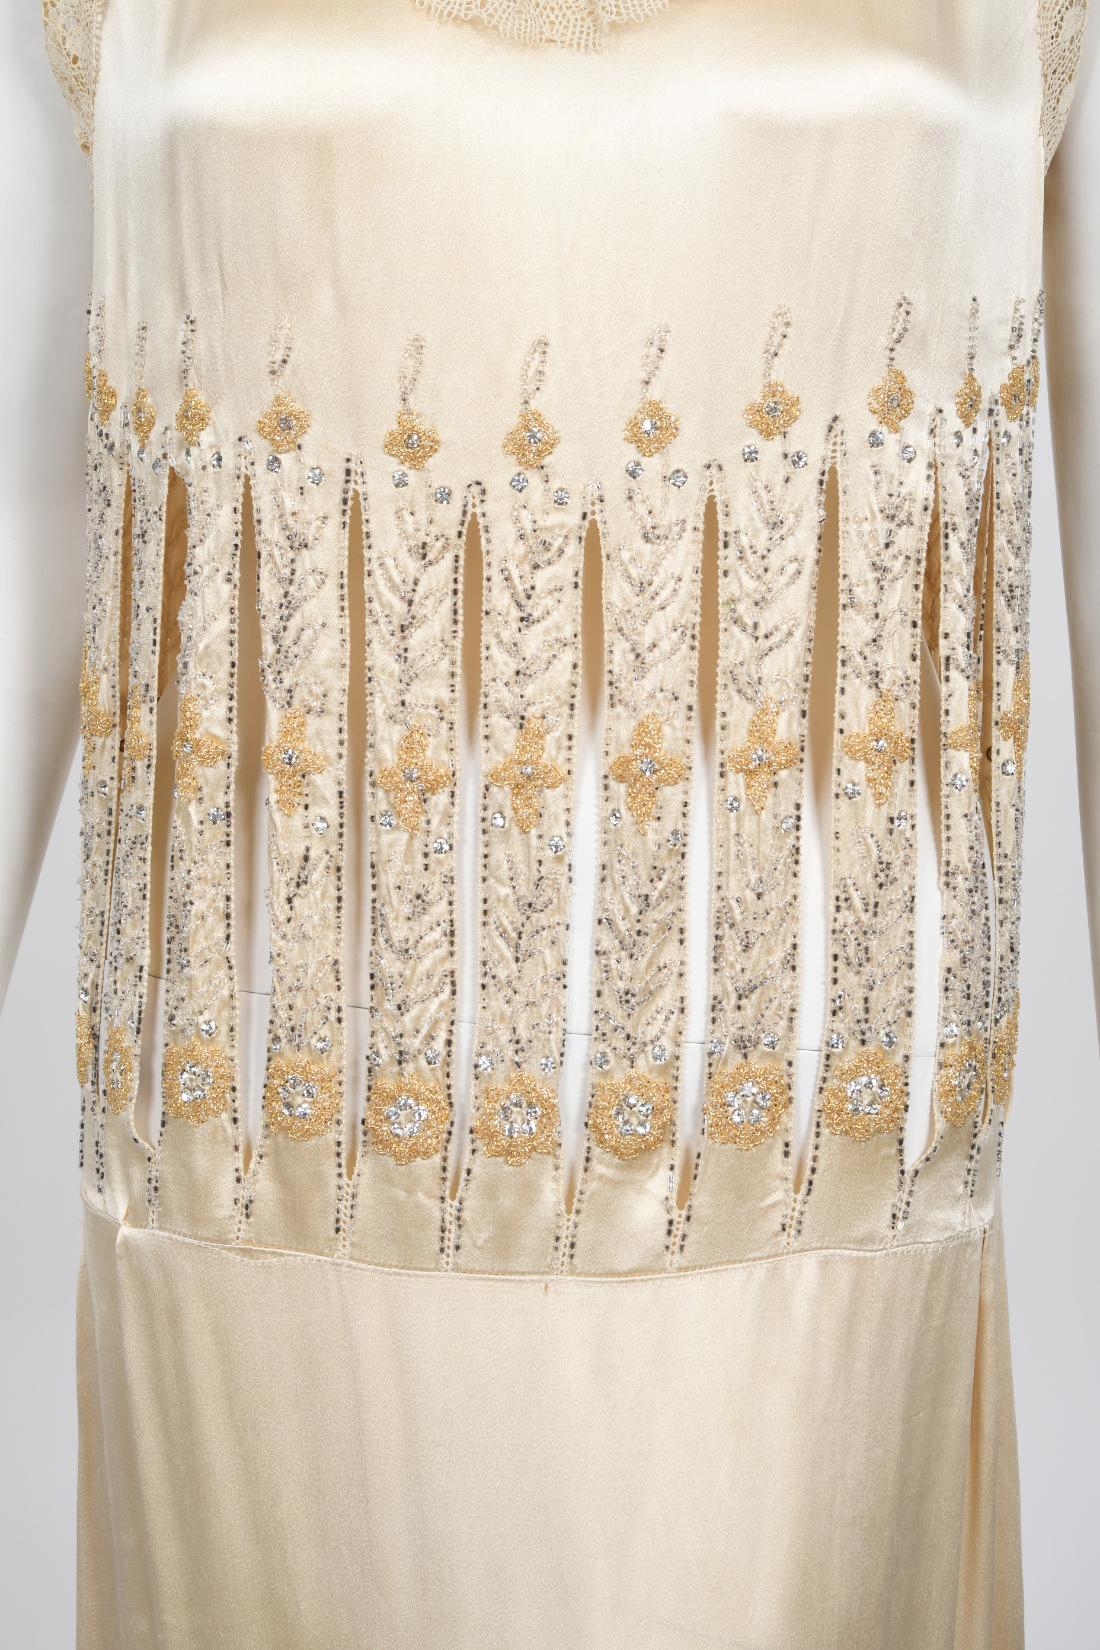 Women's Vintage 1920s Beaded Rhinestone Cream Silk Birdcage Cut-Out Fringe Flapper Dress